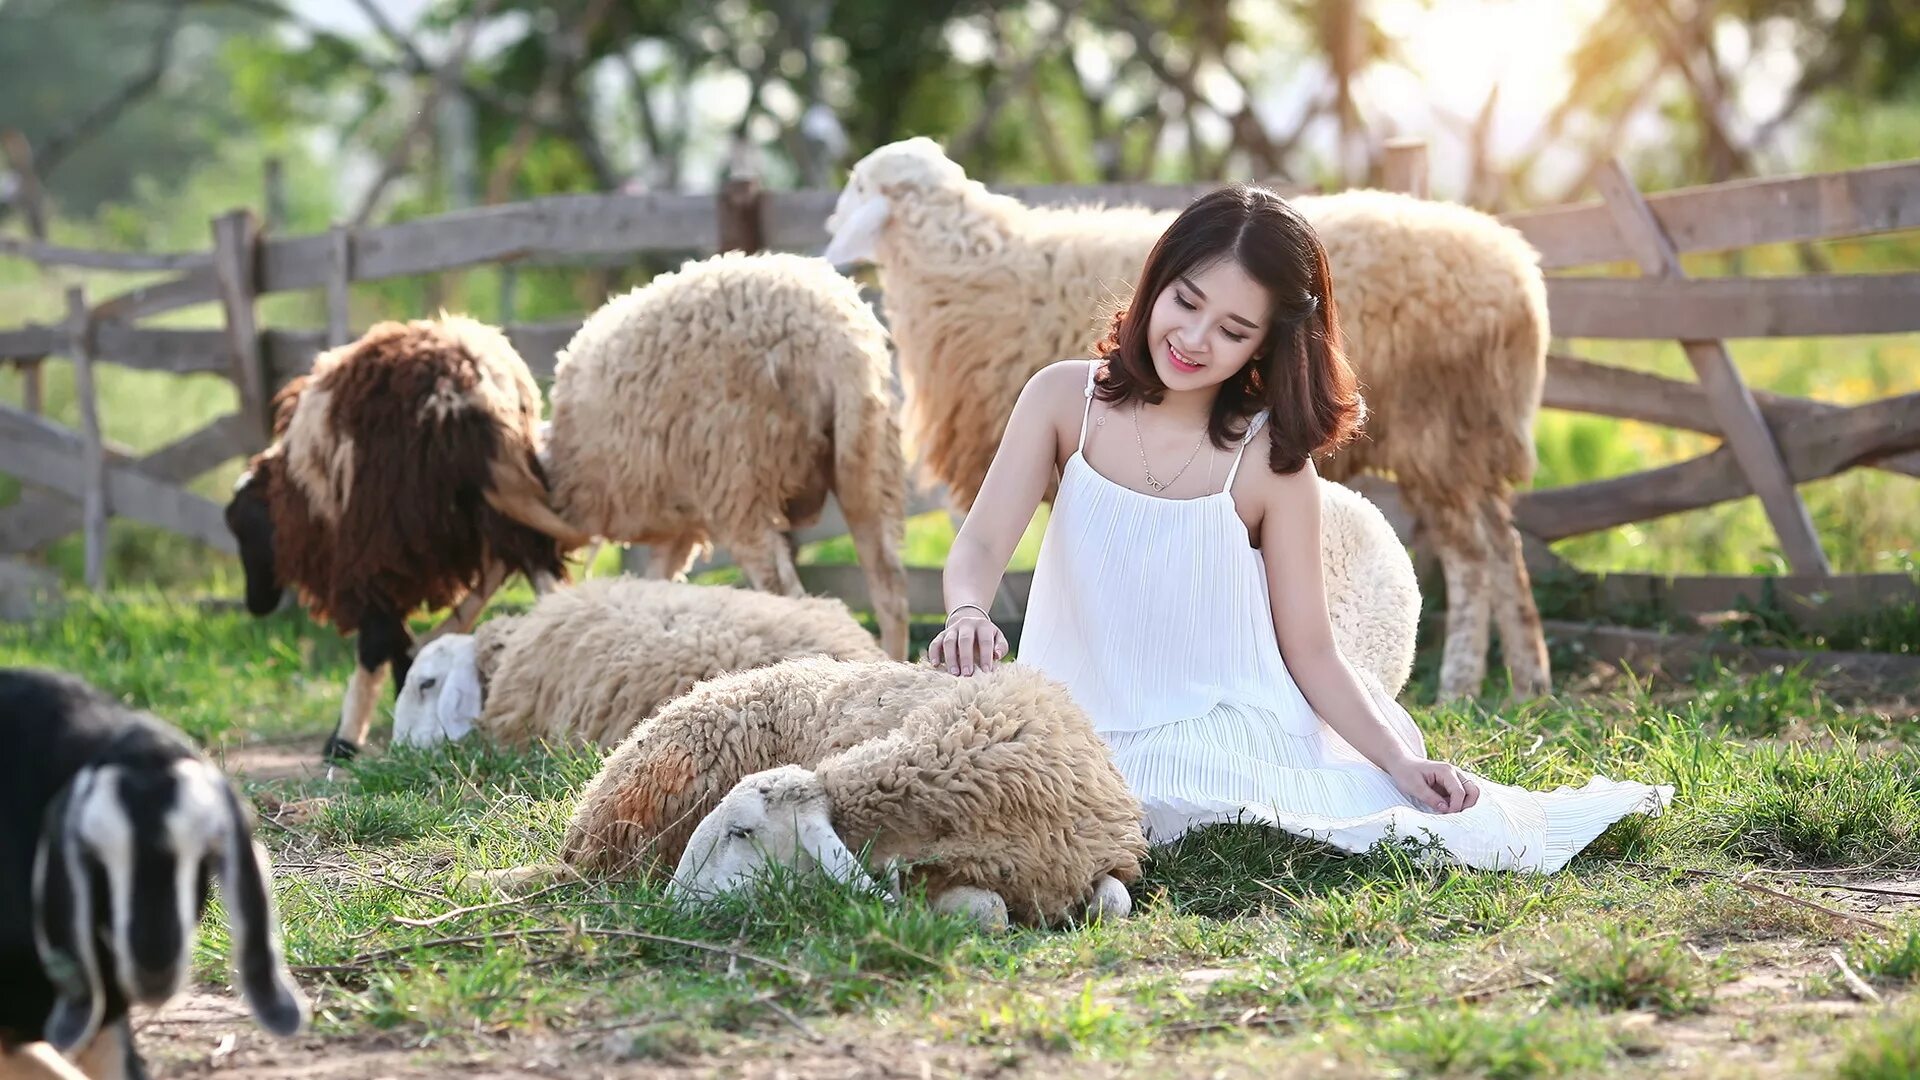 Пасу овечек. Девочка Овечка. Девушка с бараном. Овца девушка. Фотосессия с овцами.